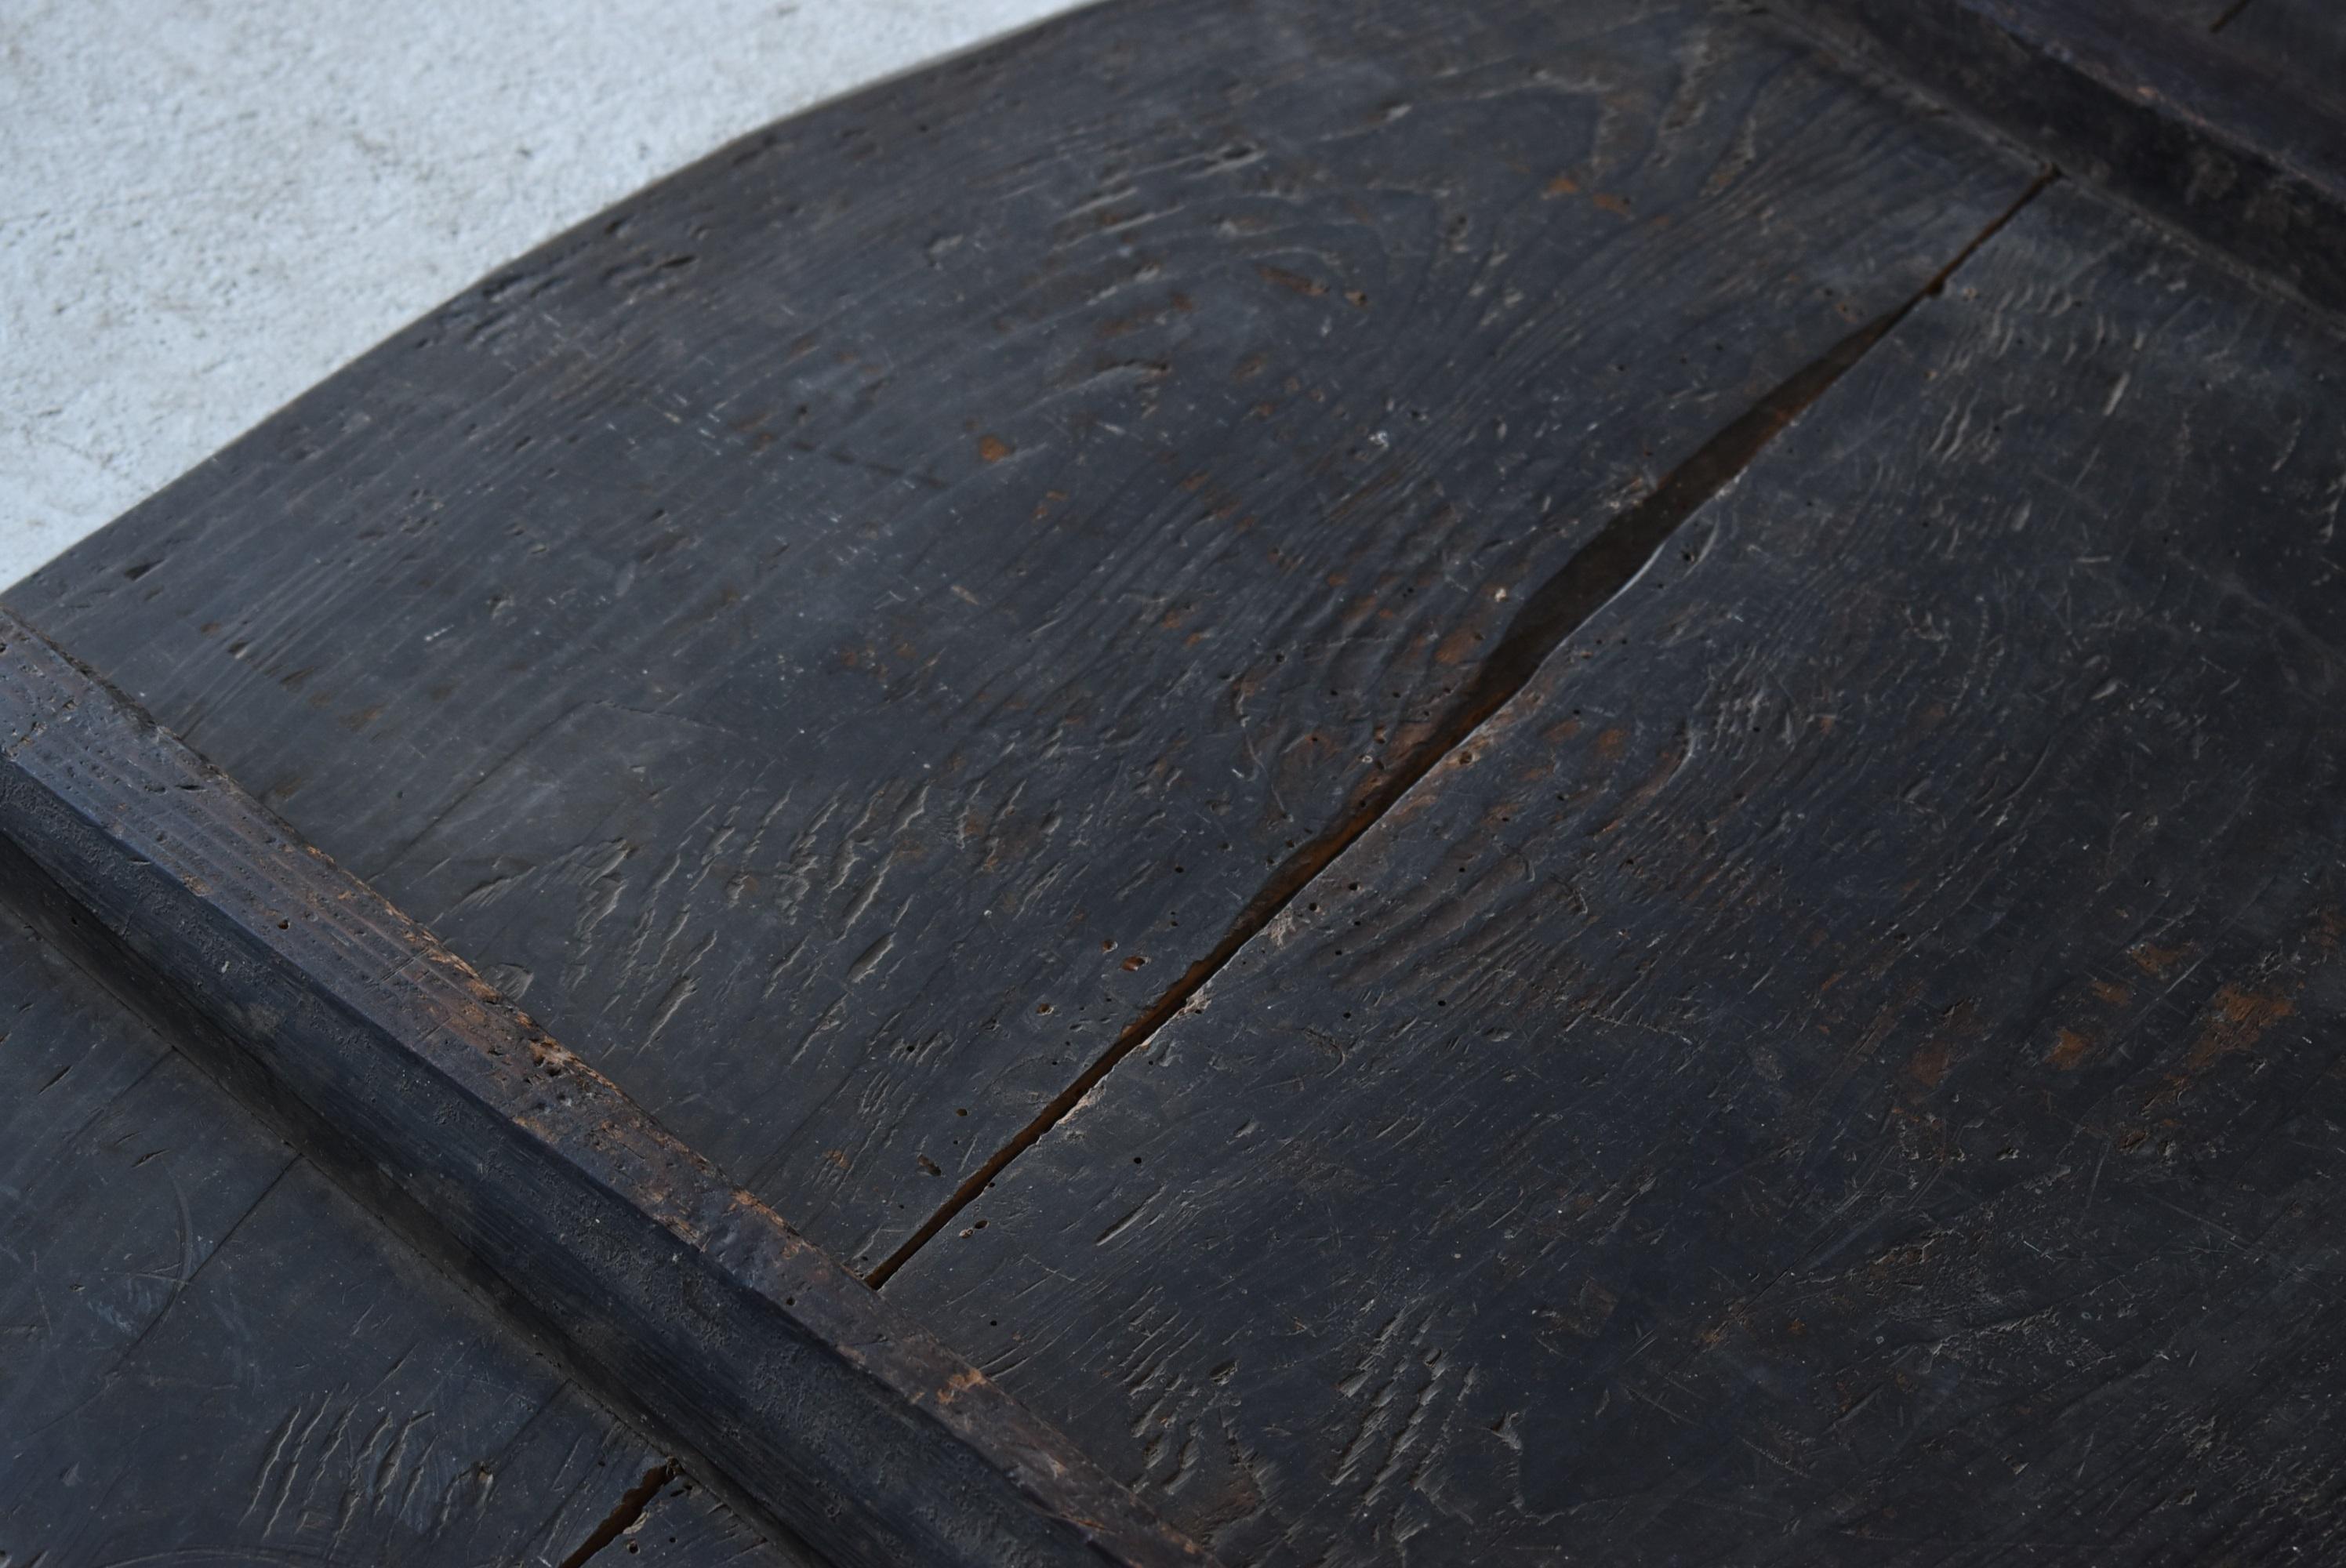 Japanese Antique Black Wooden Board 1800s-1900s/Abstract Art Wabisabi Art 2